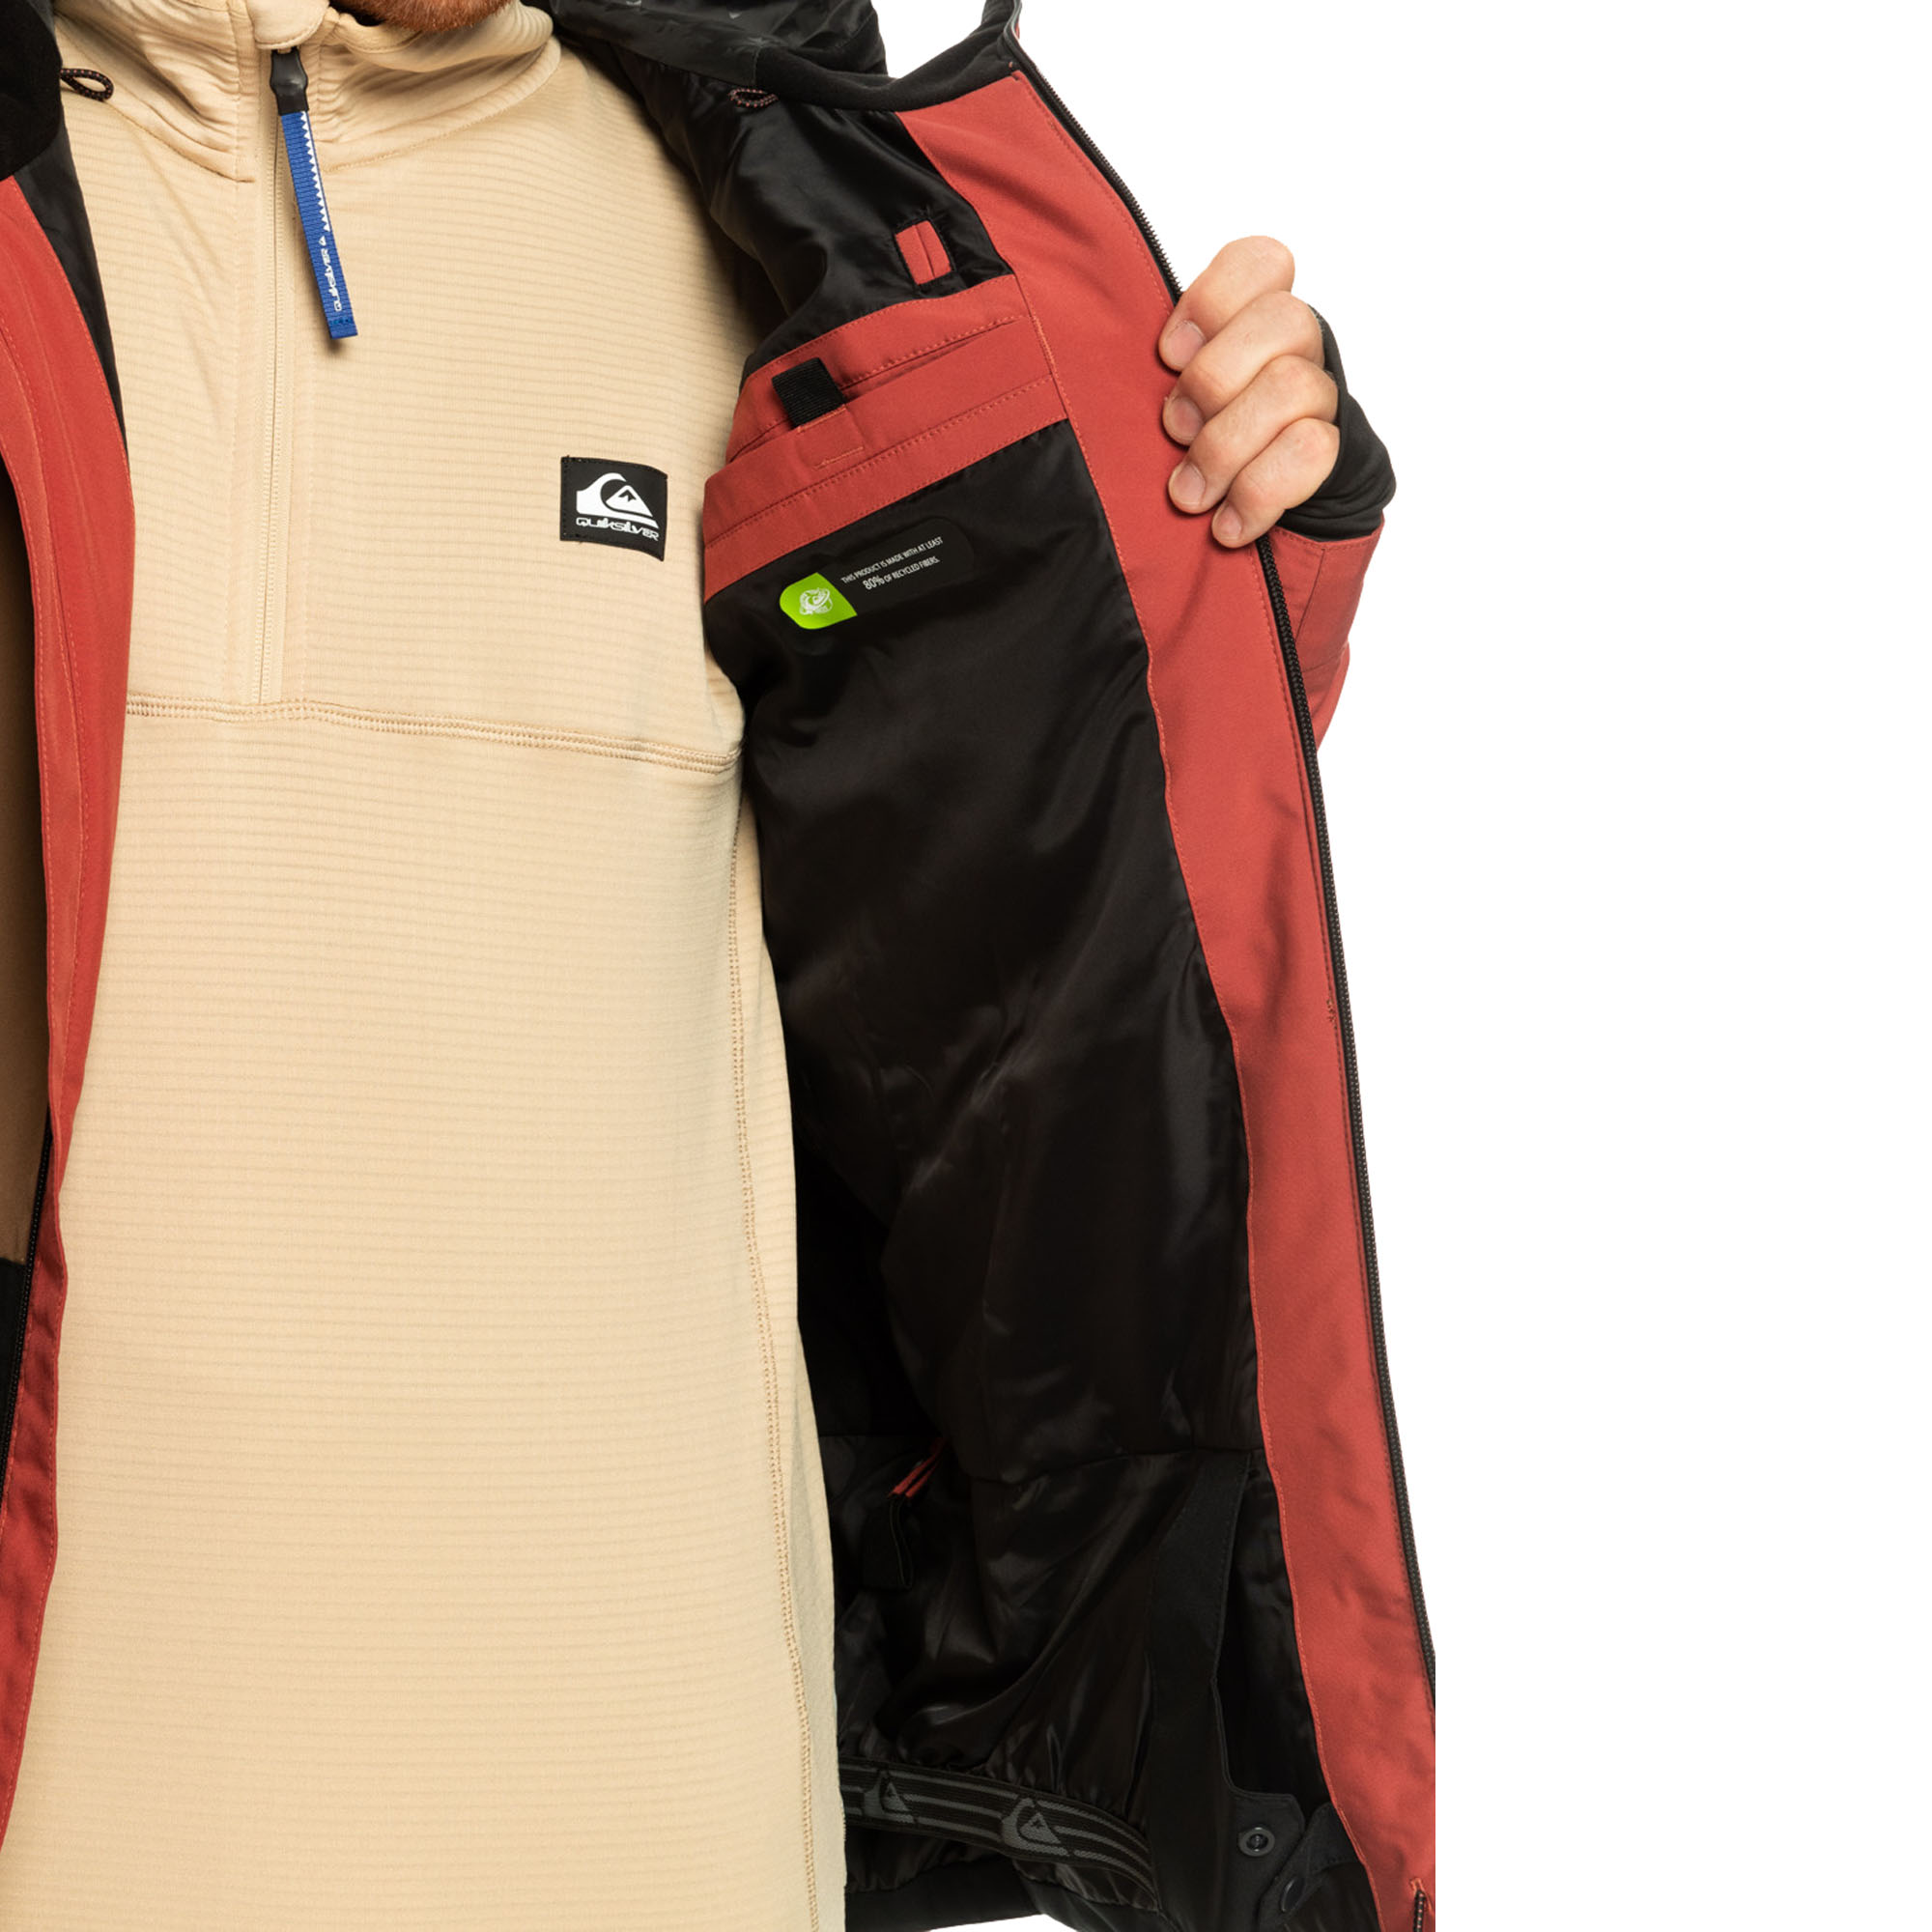 Quiksilver Sycamore Ski/Snowboard Jacket